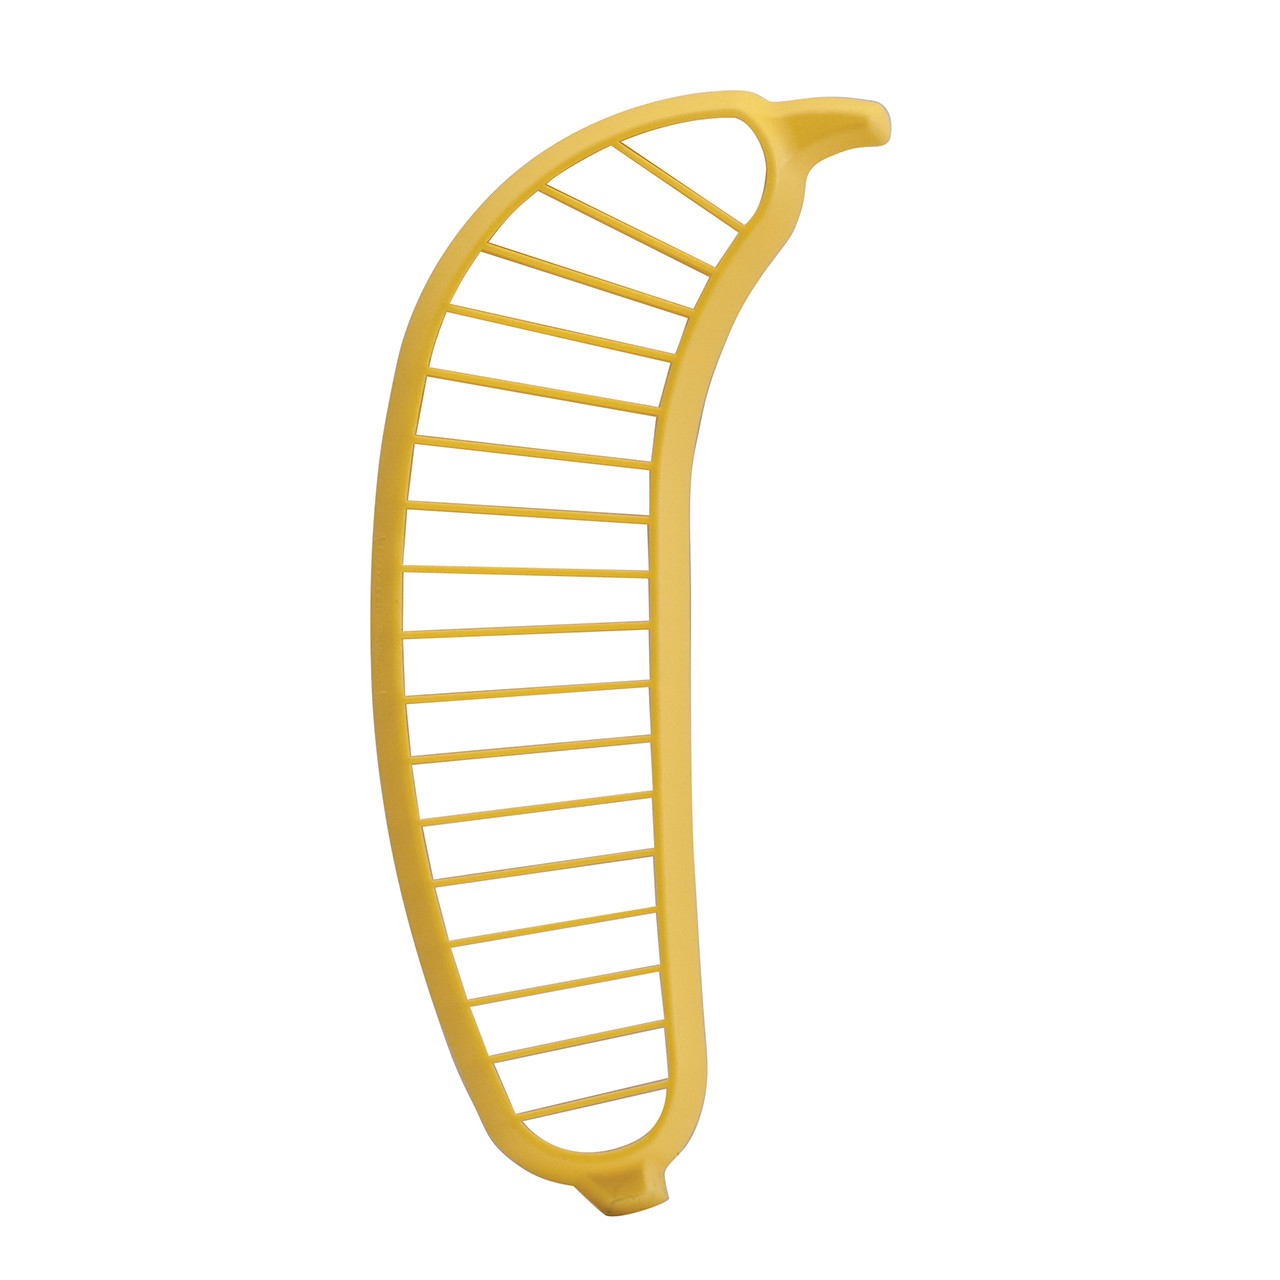 Banana Slicer - Montessori Services